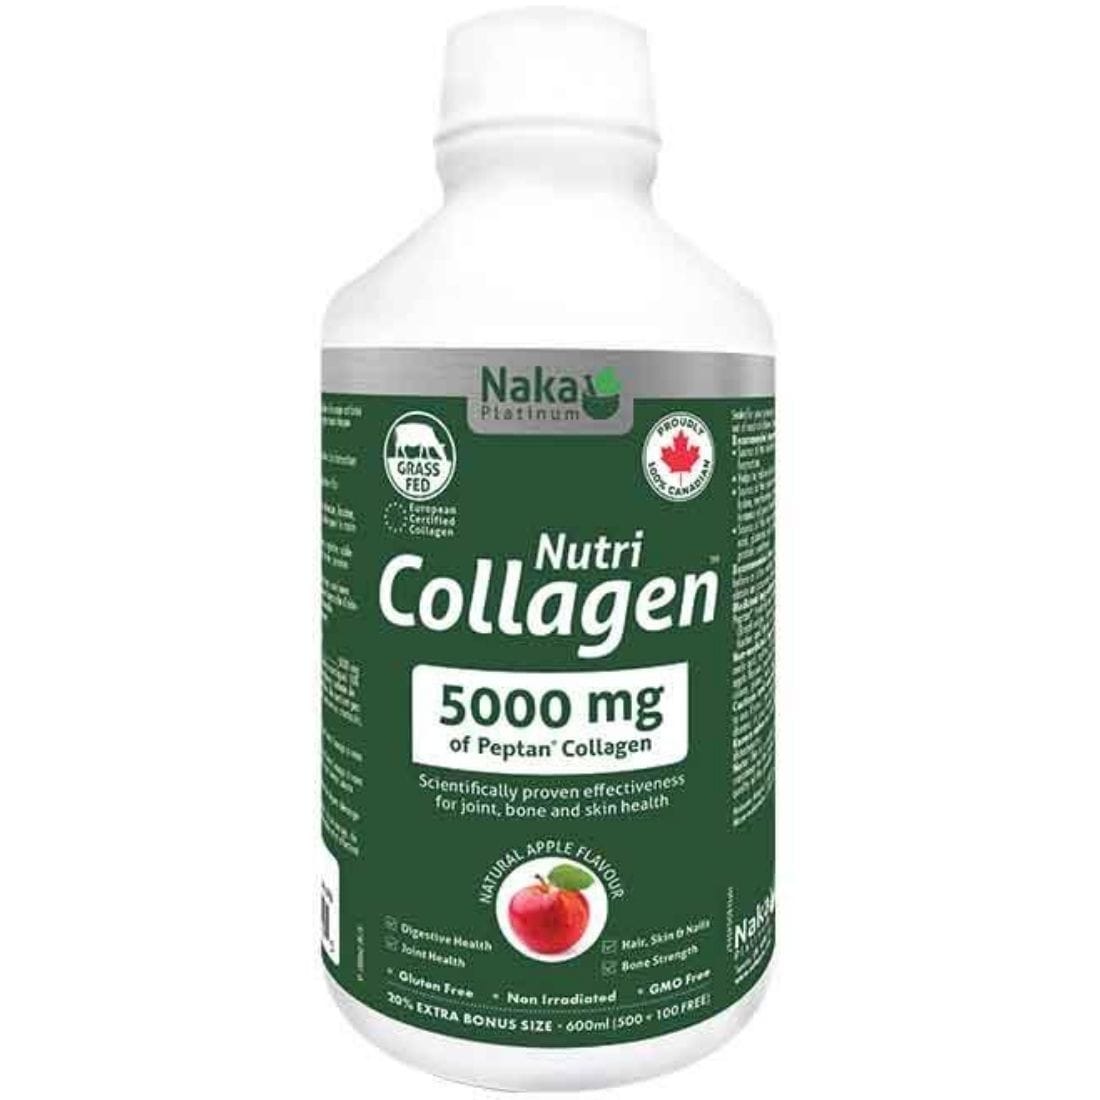 Naka Platinum Nutri Collagen (5000mg) Liquid